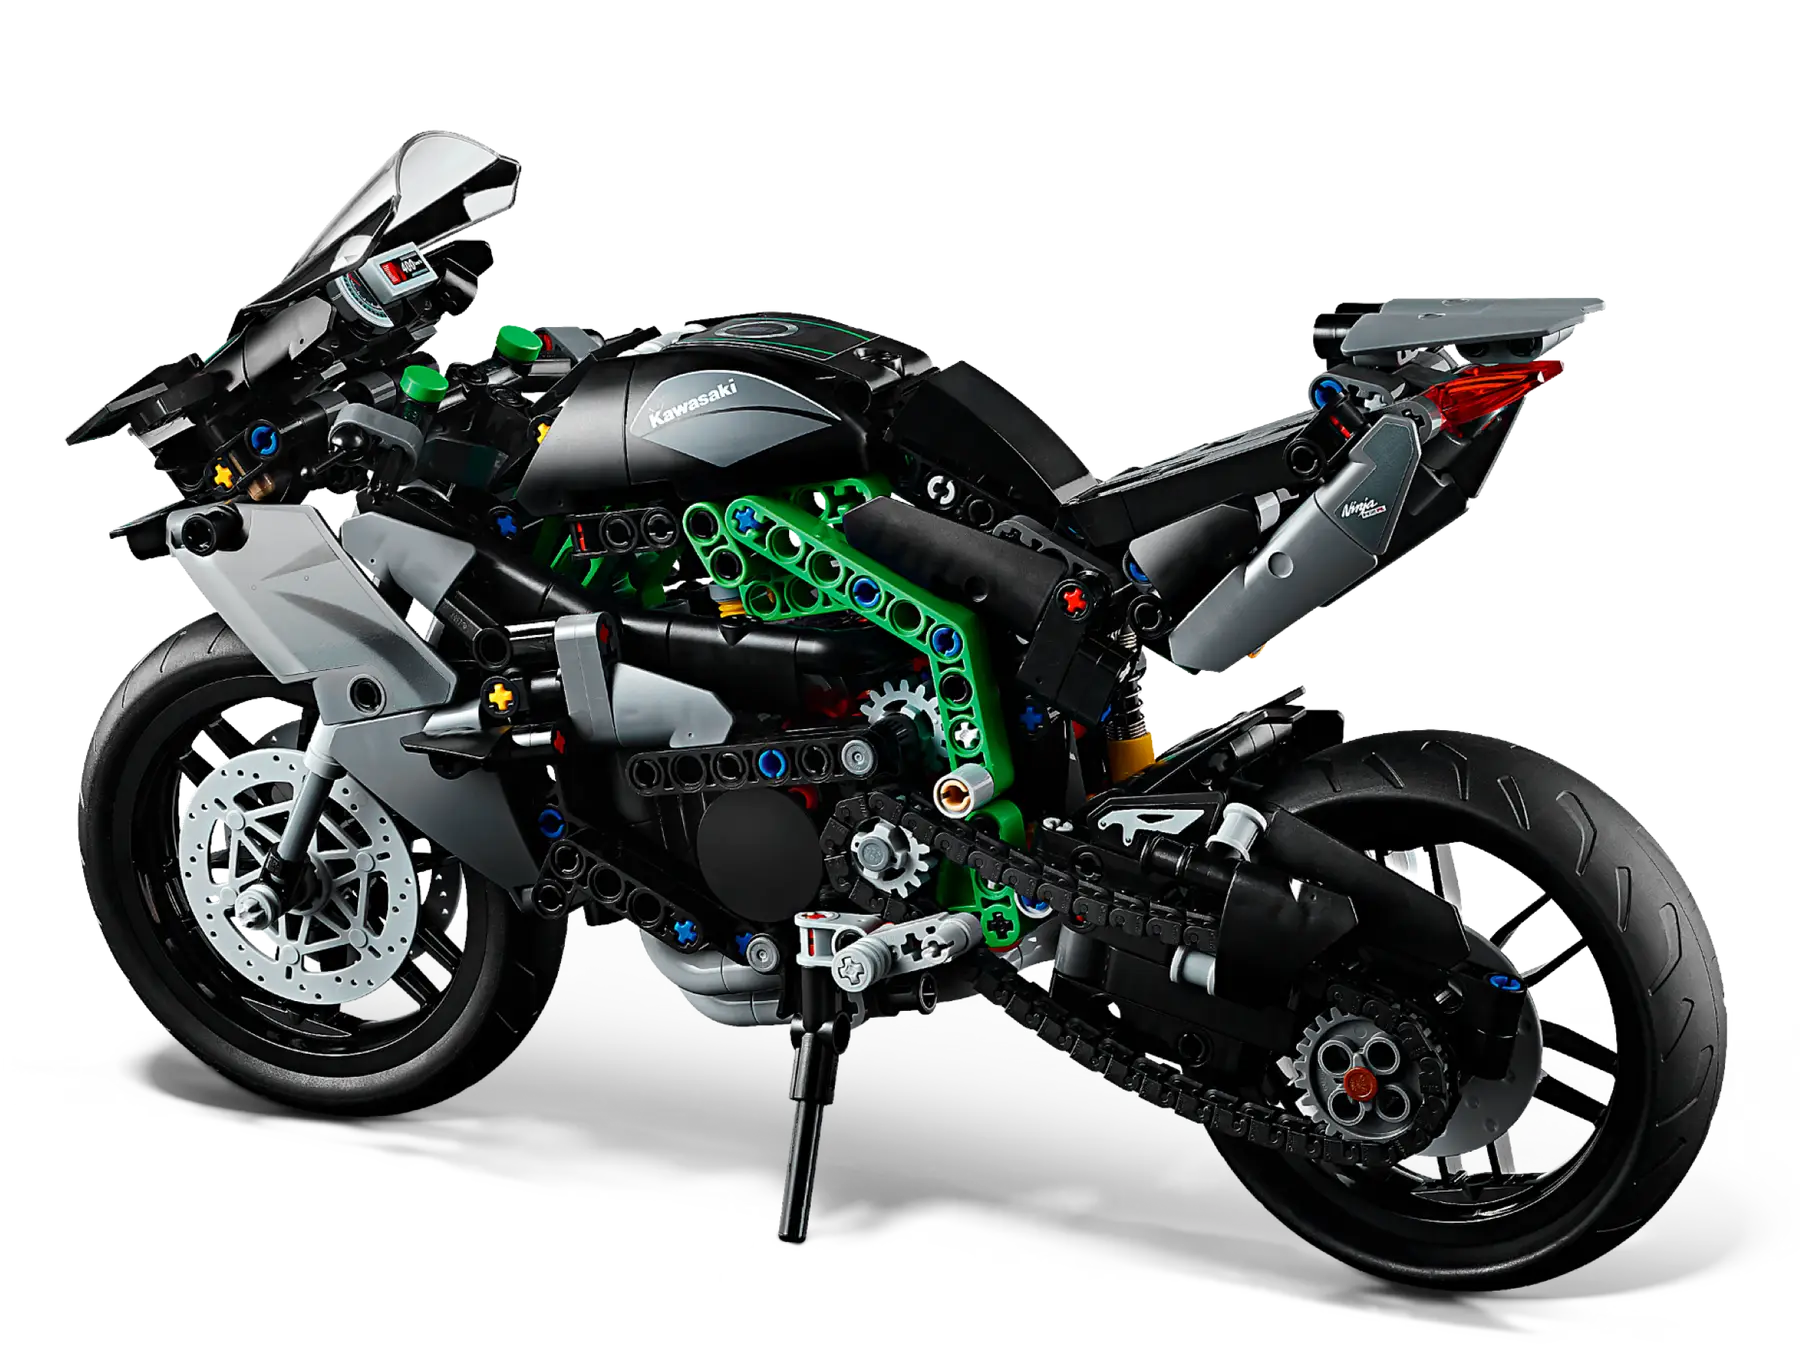 LEGO Technic Kawasaki Ninja H2R Motosiklet 42170 - Thumbnail